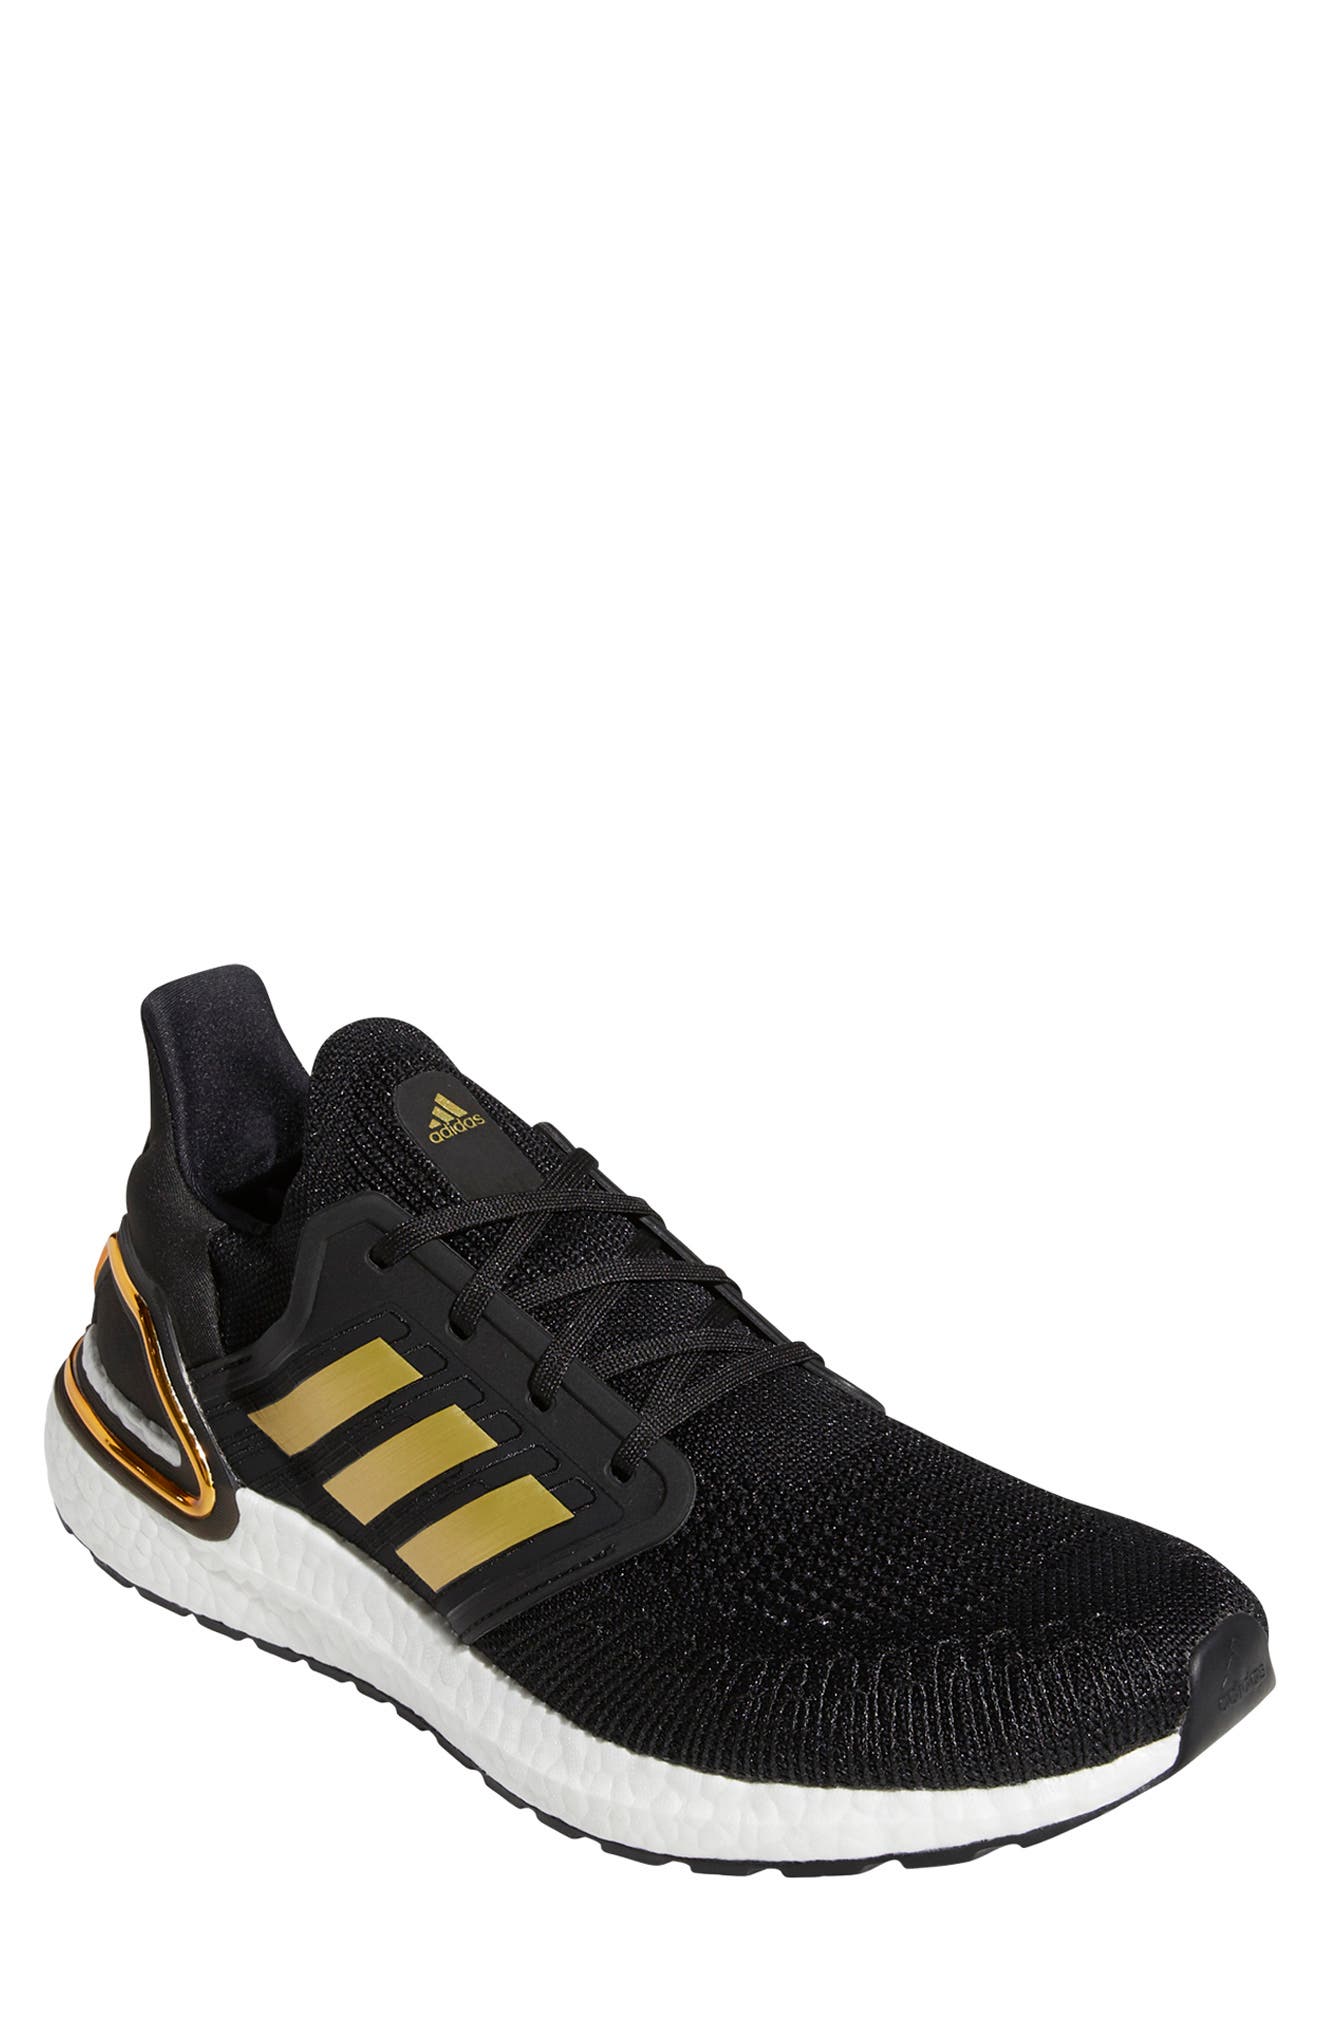 Adidas Originals Ultraboost 20 Running Shoe In Black/ Gold Met/ Solar Red